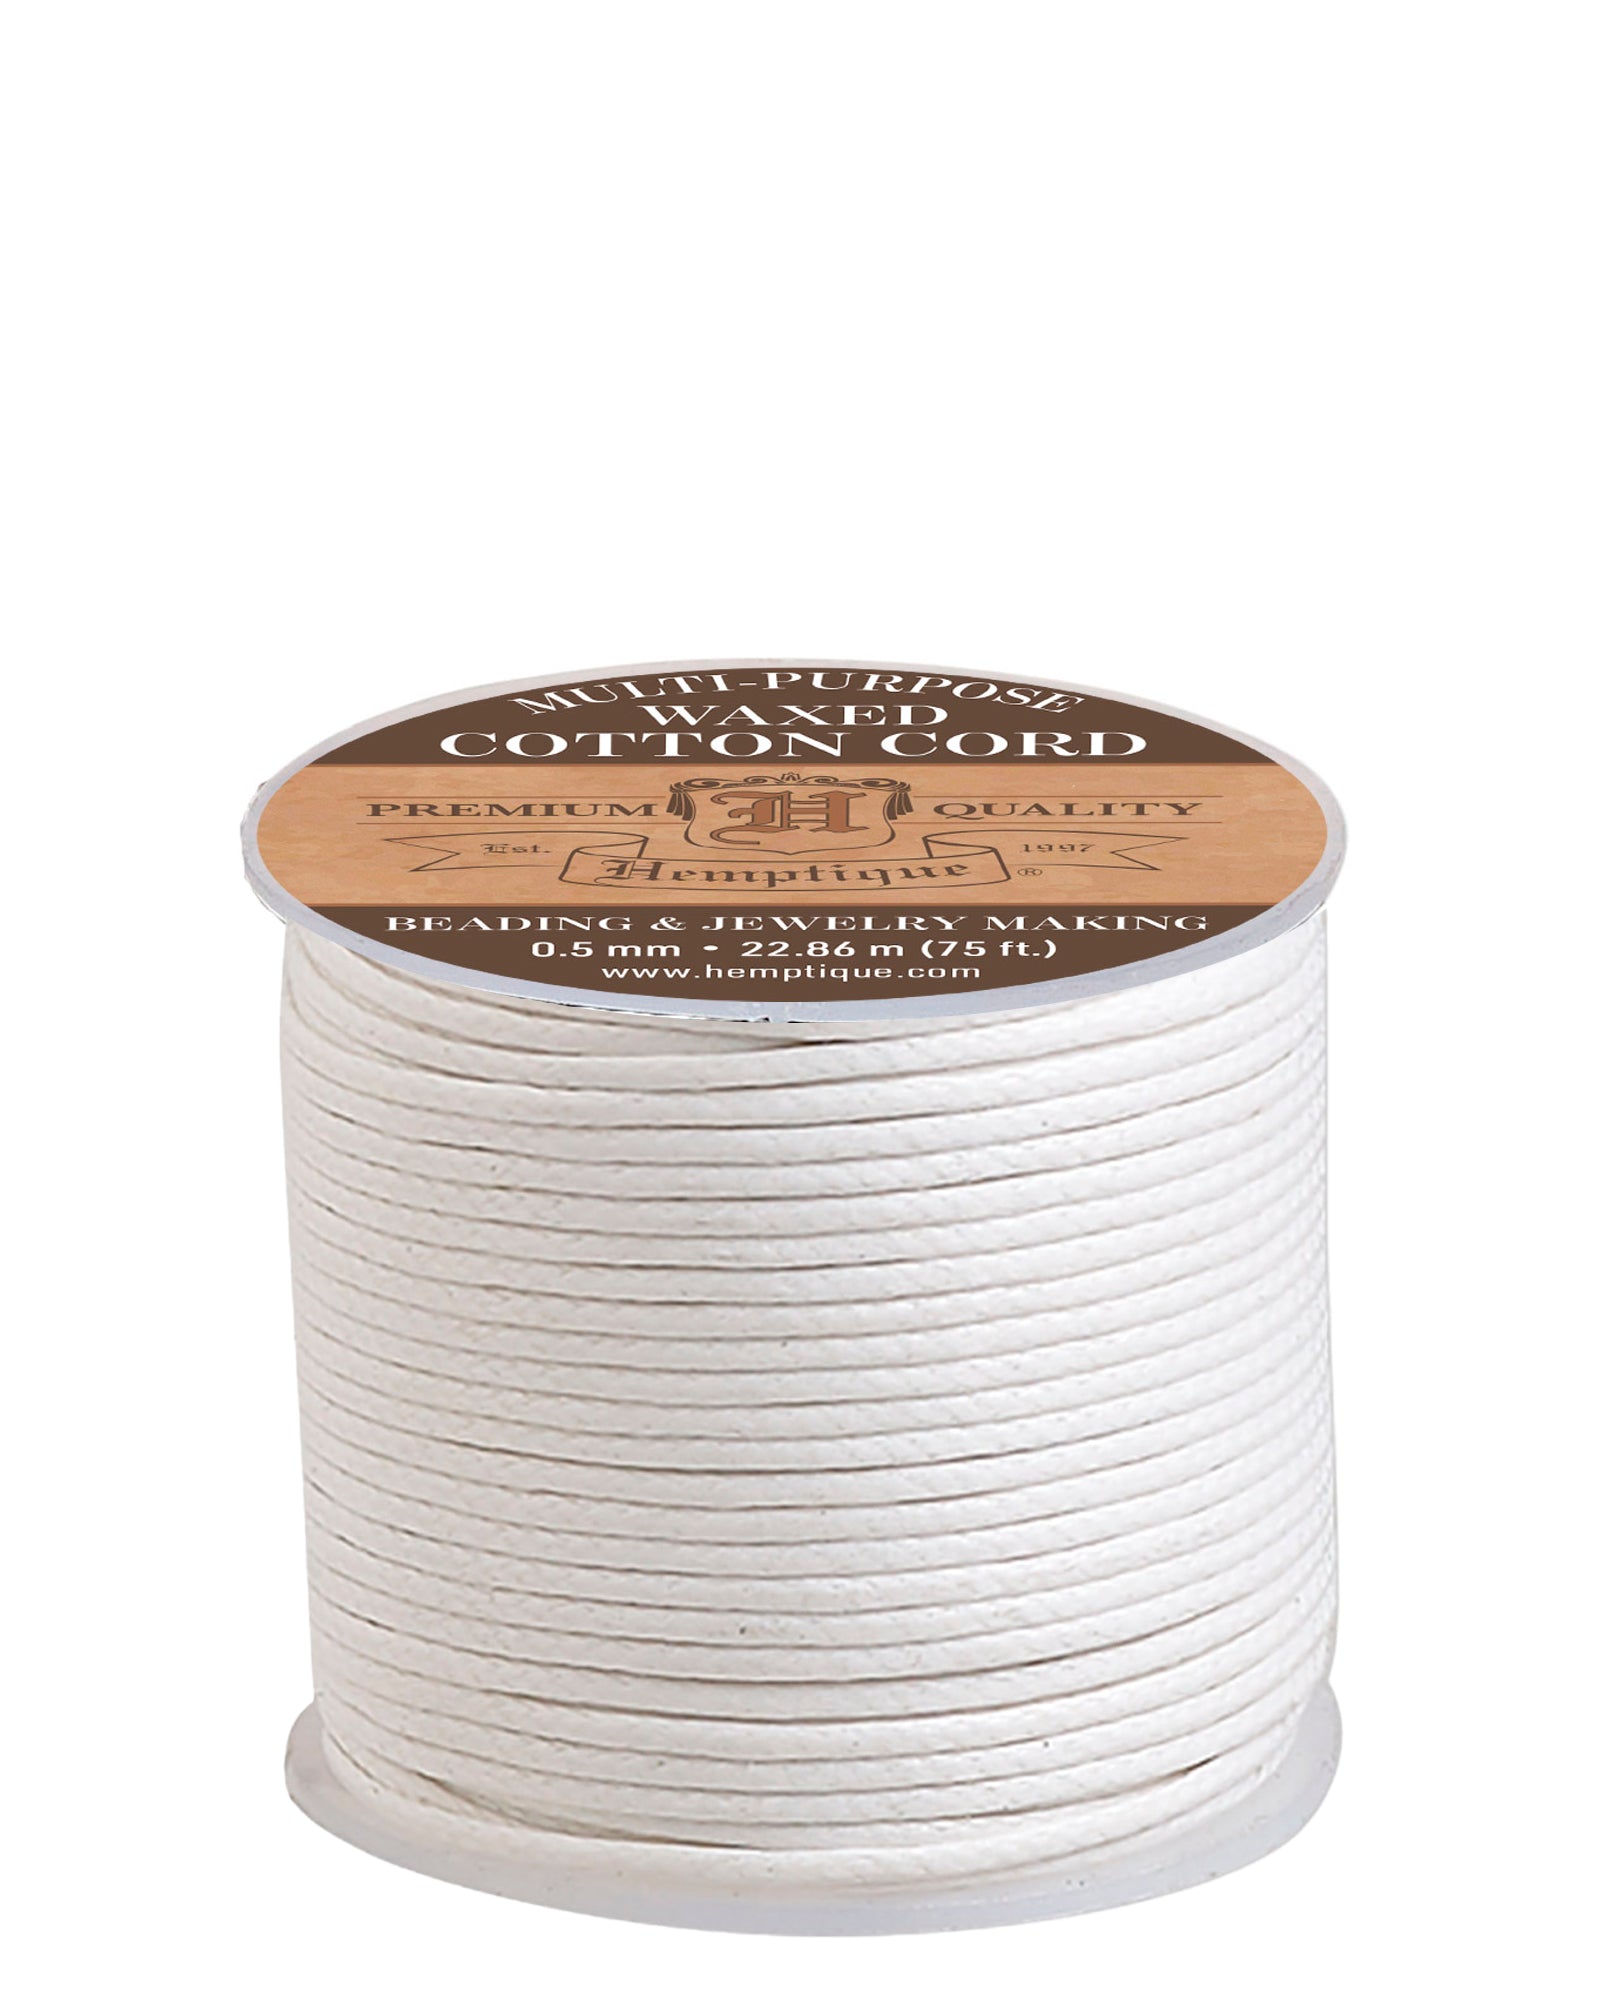 Waxed Cotton Cord - 0.5mm Black, White, Natural, Brown - Hemptique